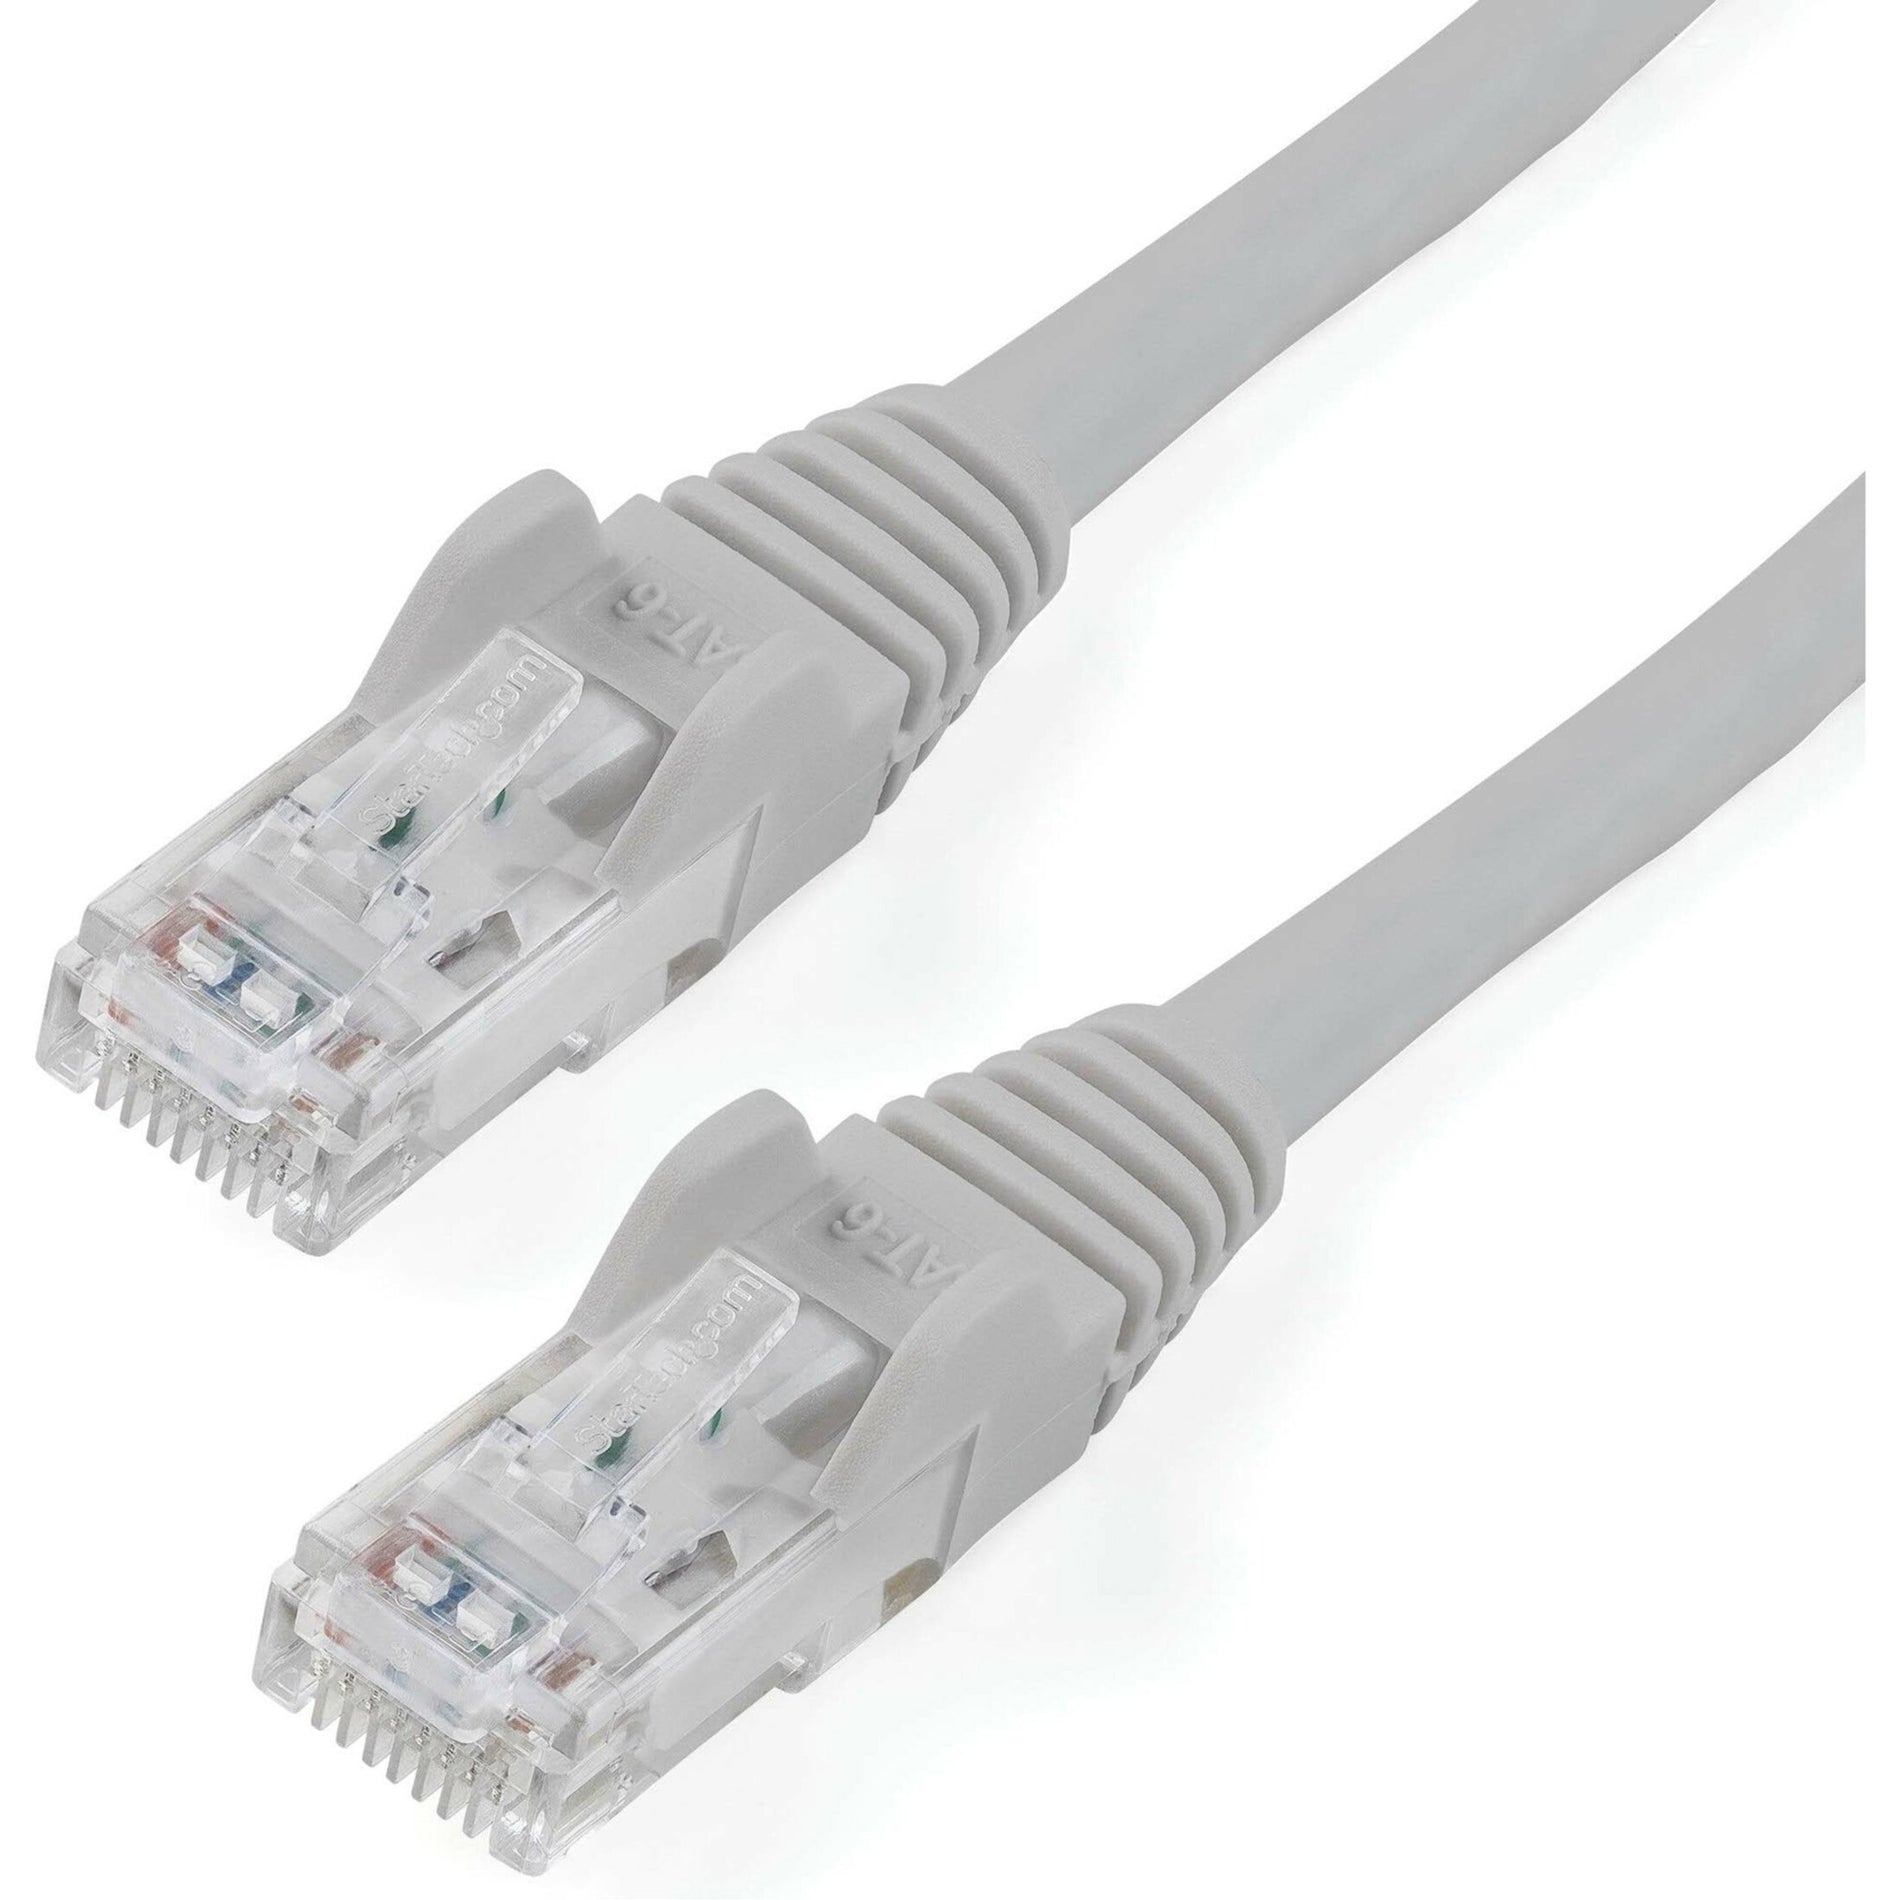 StarTech.com N6PATCH4GR Cat6 电缆 4ft 灰色 Ethernet 电缆 Snagless RJ45 连接器 星纳科技(N6PATCH4GR) Cat6 电缆 4英尺 灰色 Ethernet 电缆 无卡口 RJ45 连接器